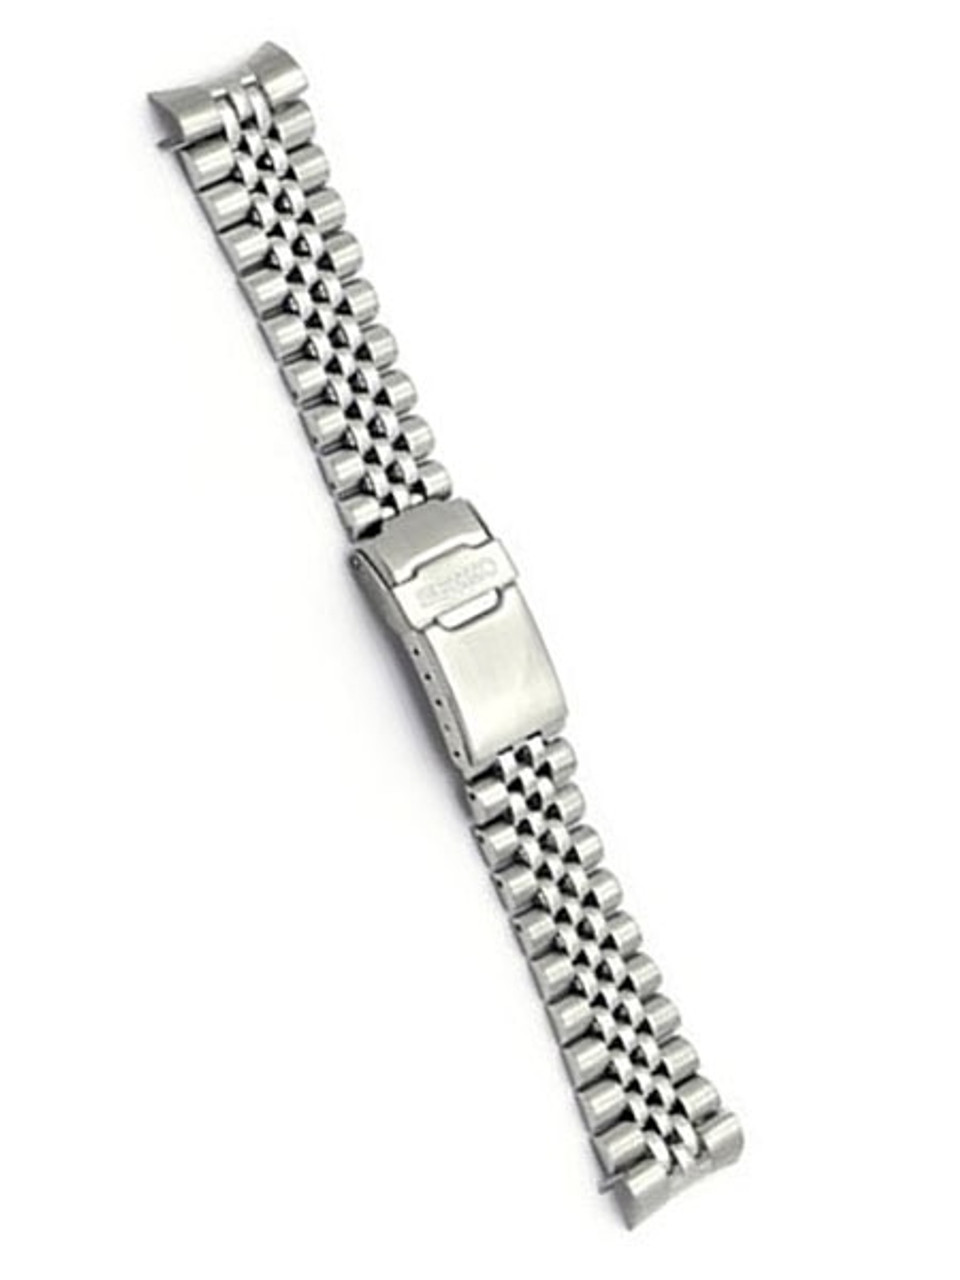 Lincoln Bracelet (Seiko SKX013) – unlimitedstraps